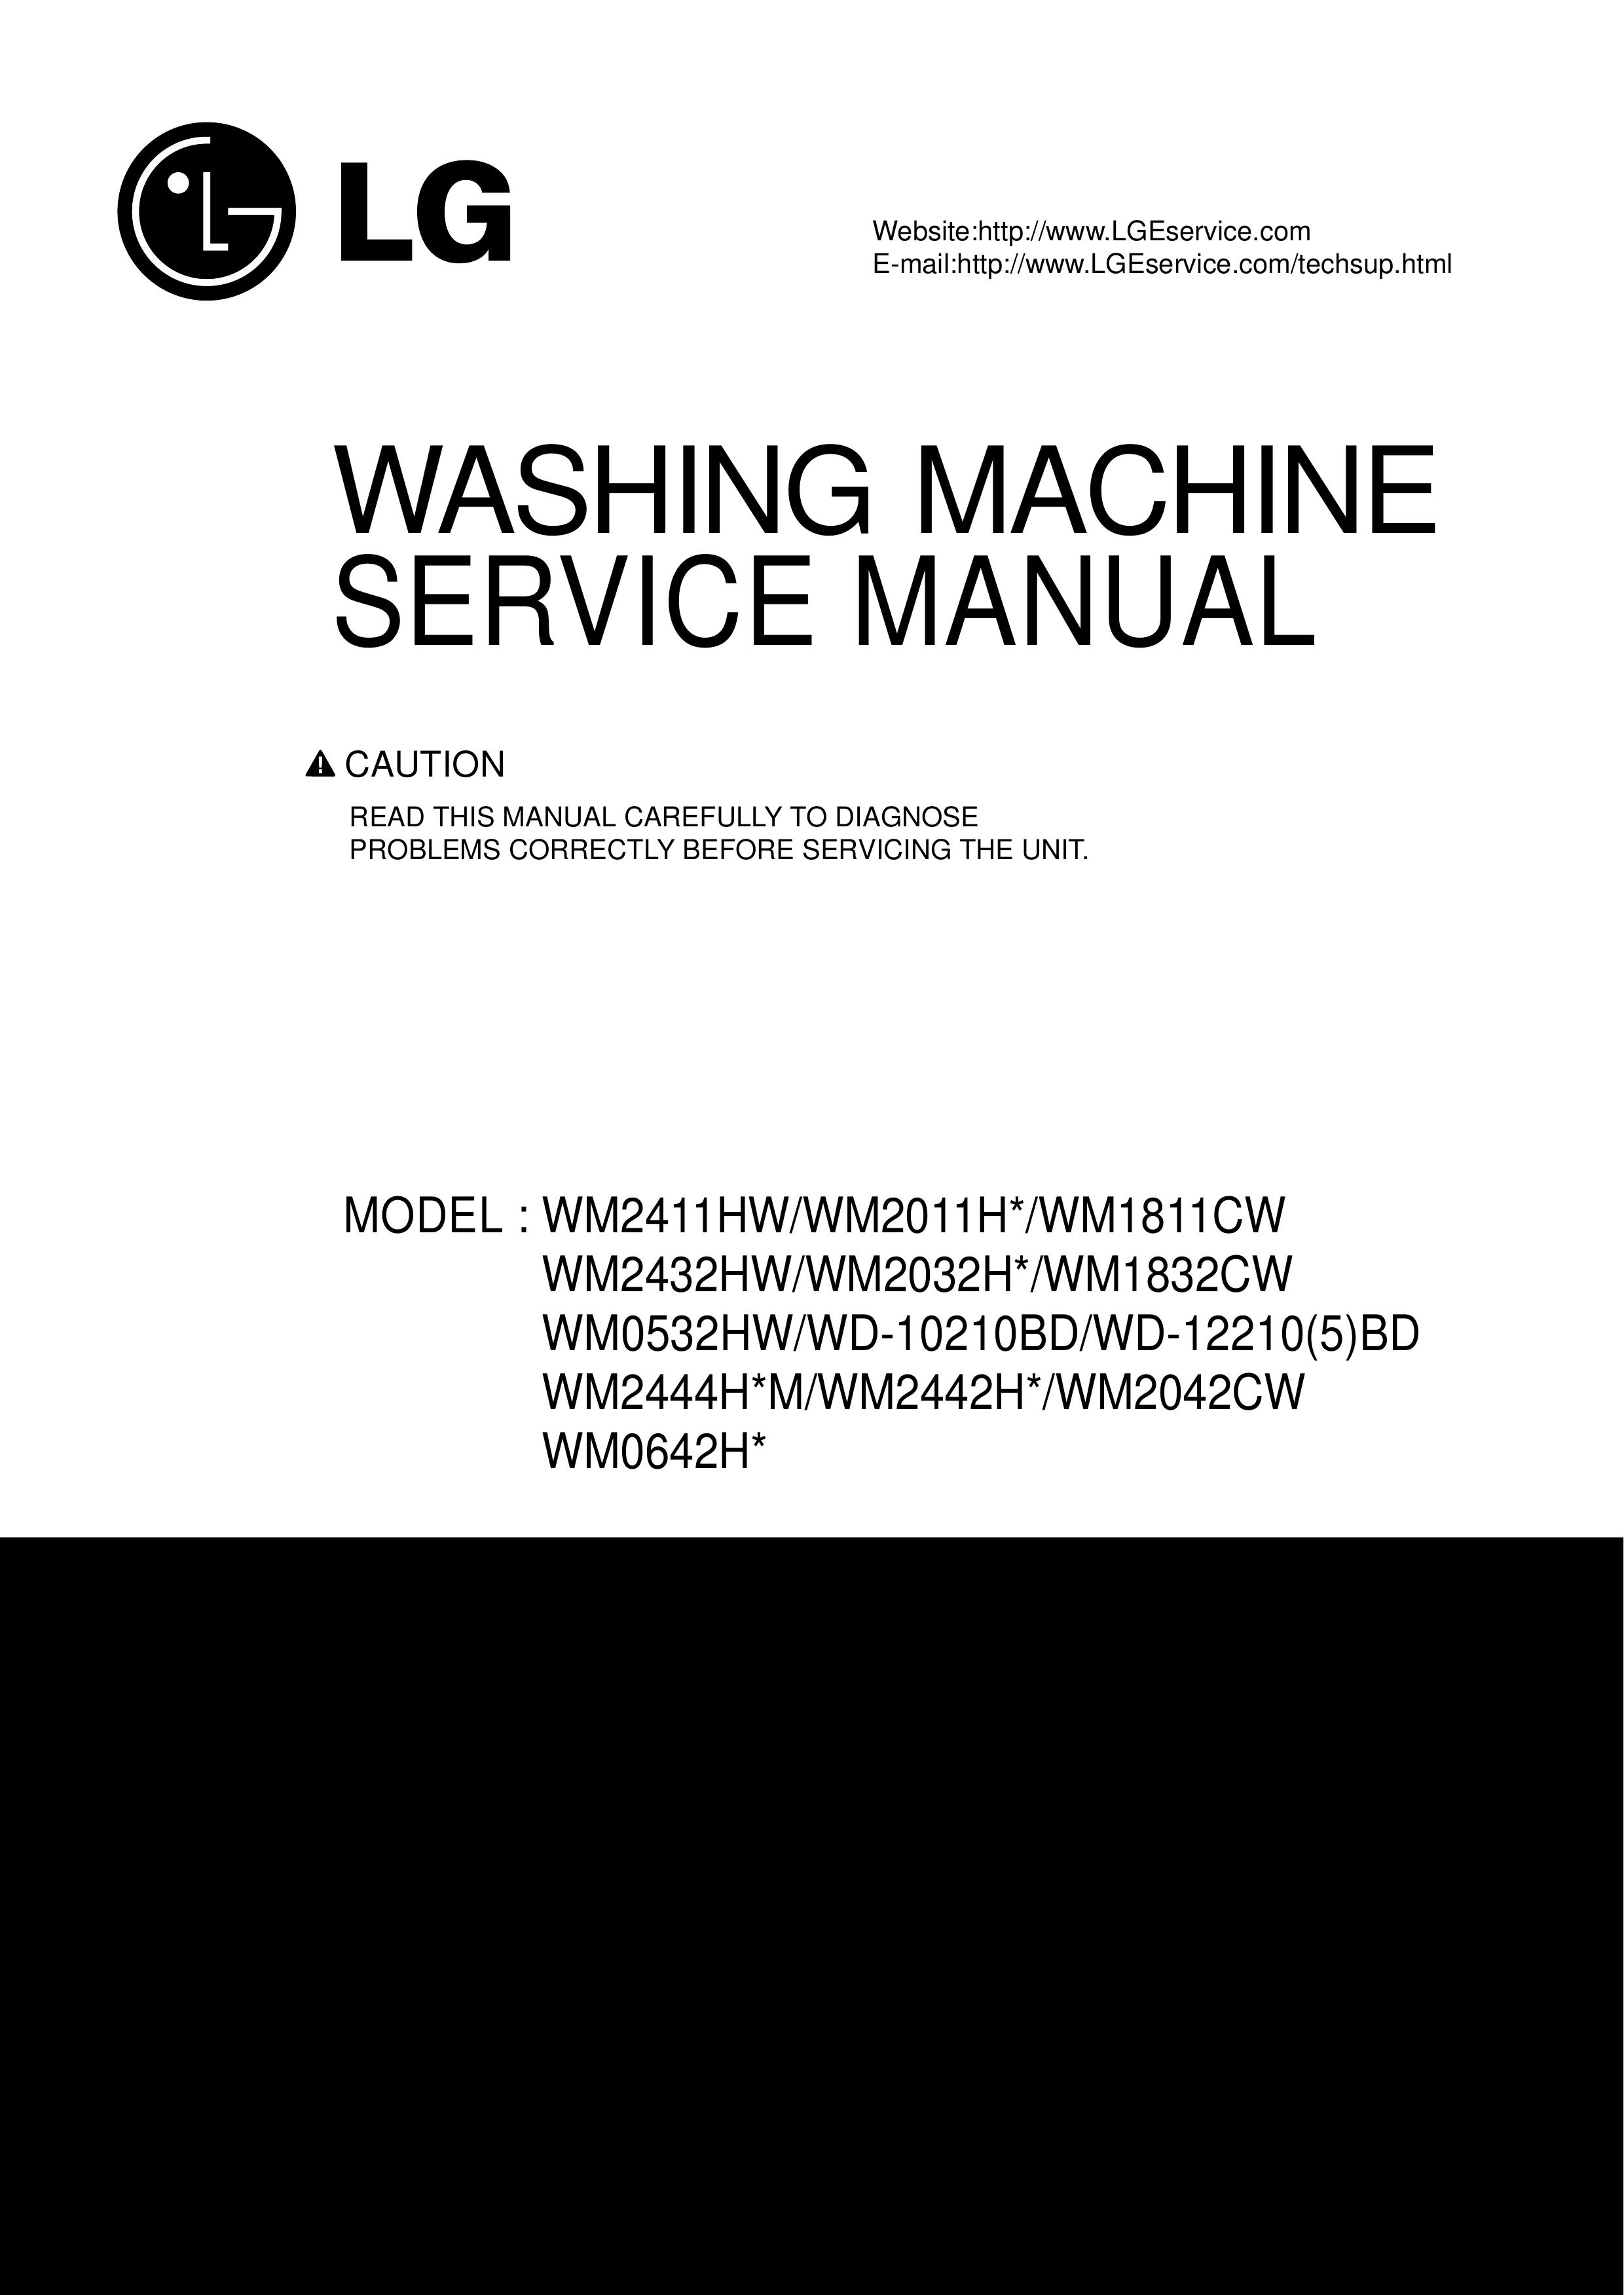 LG Electronics WM0642H* Washer/Dryer User Manual